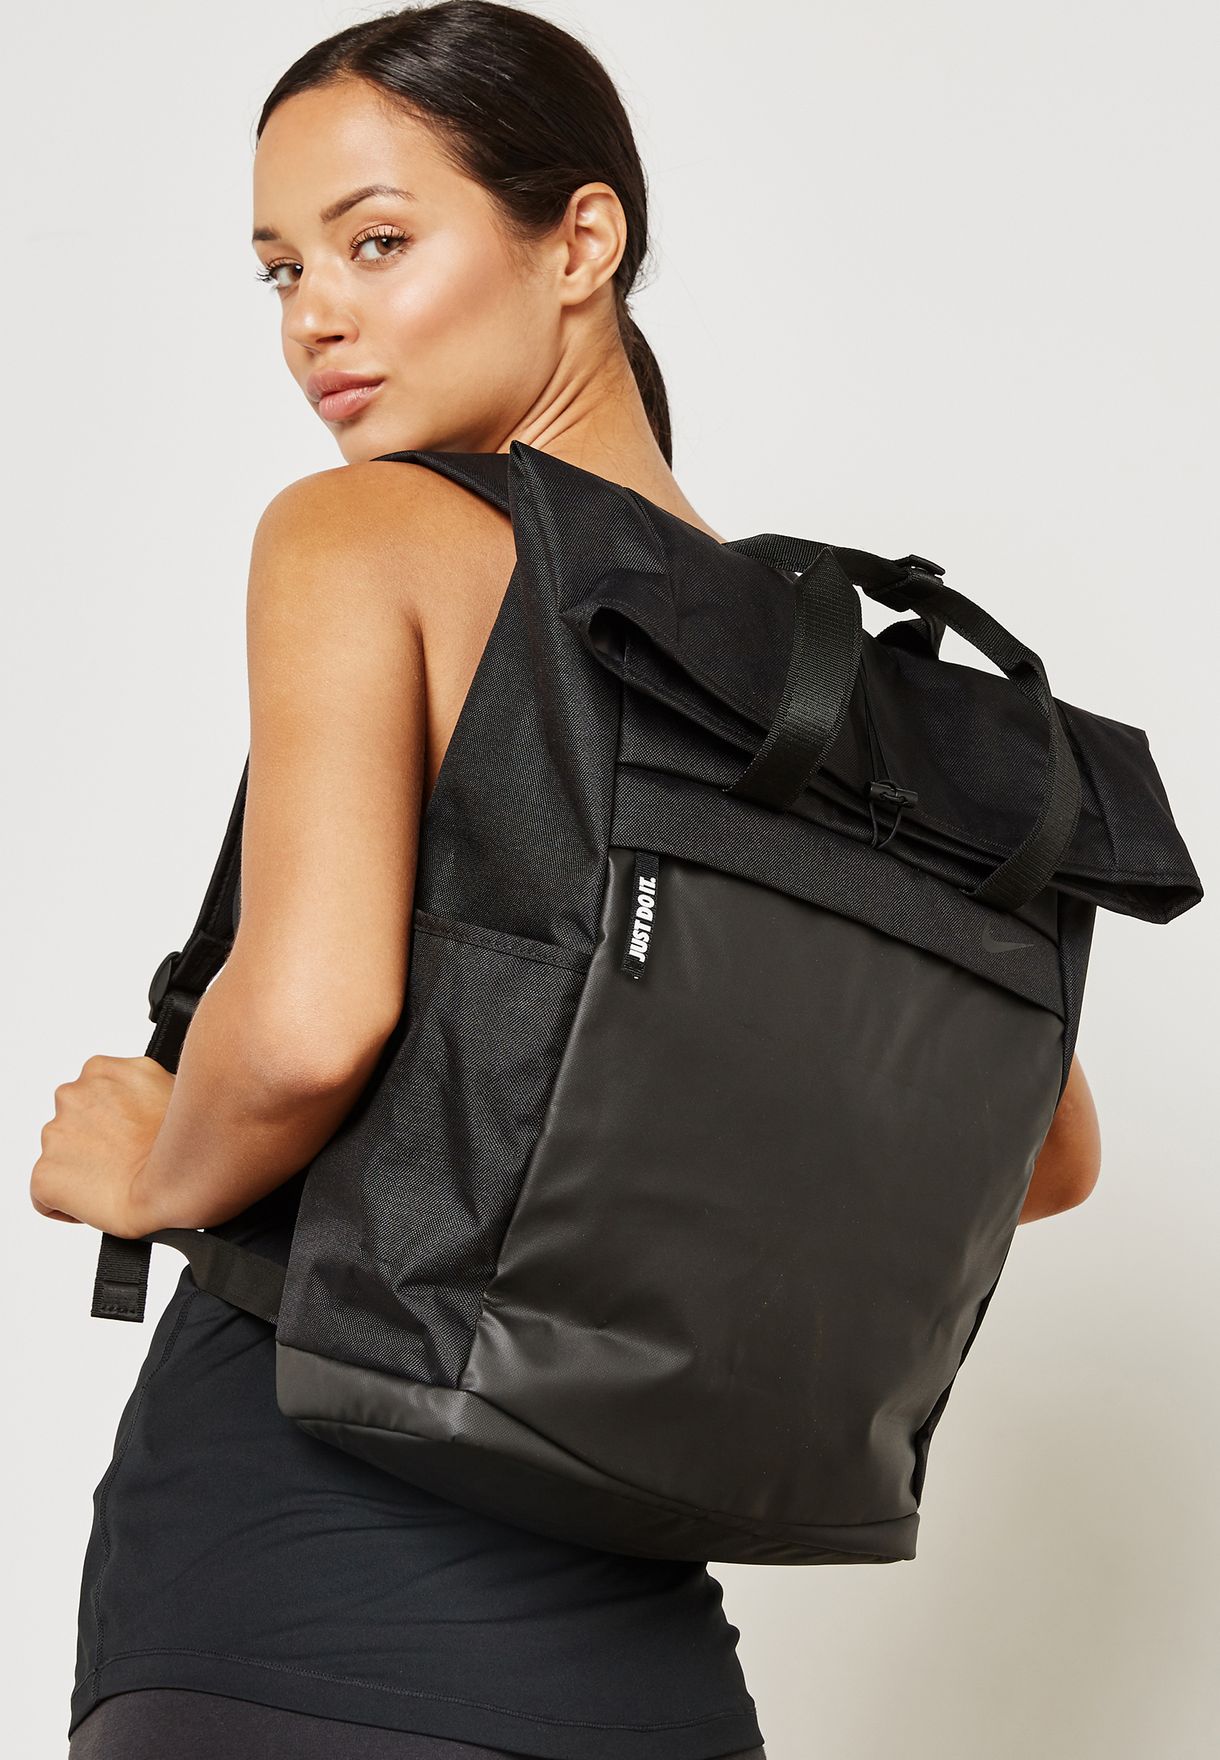 nike radiate women's training backpack